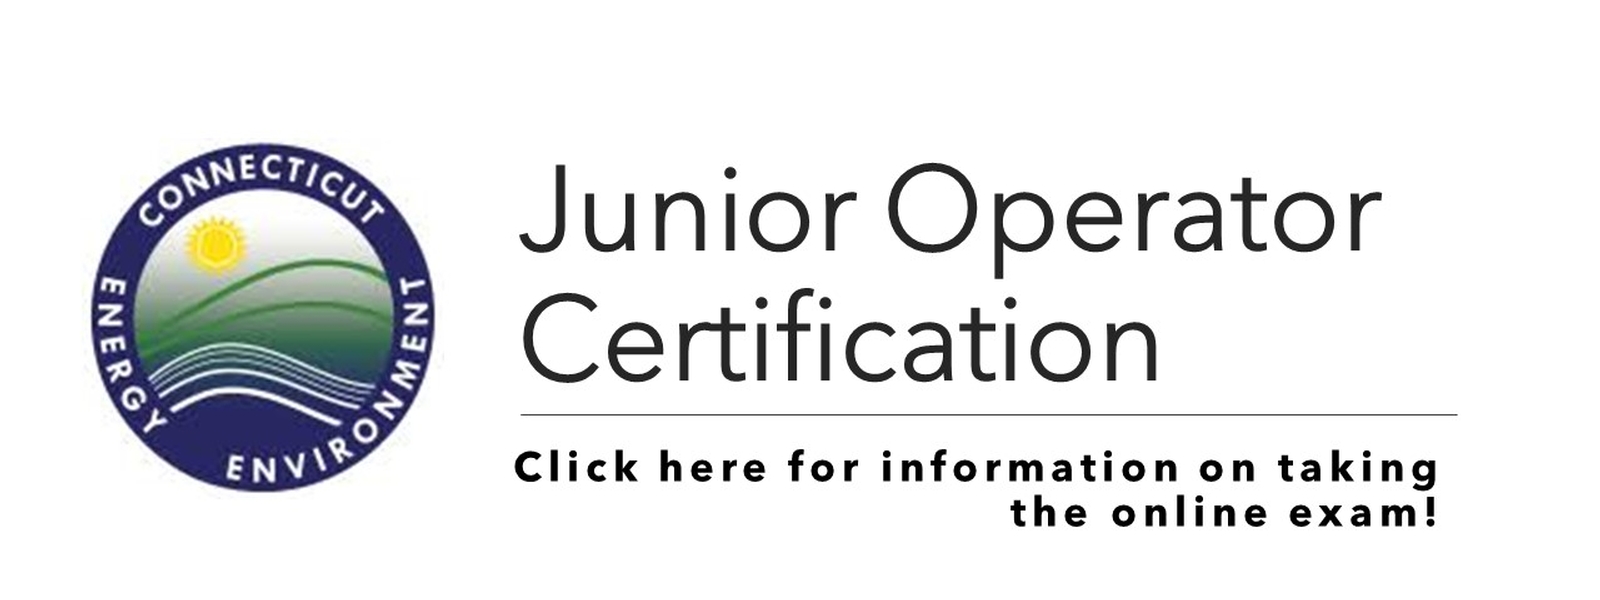 Junior Operator Certification